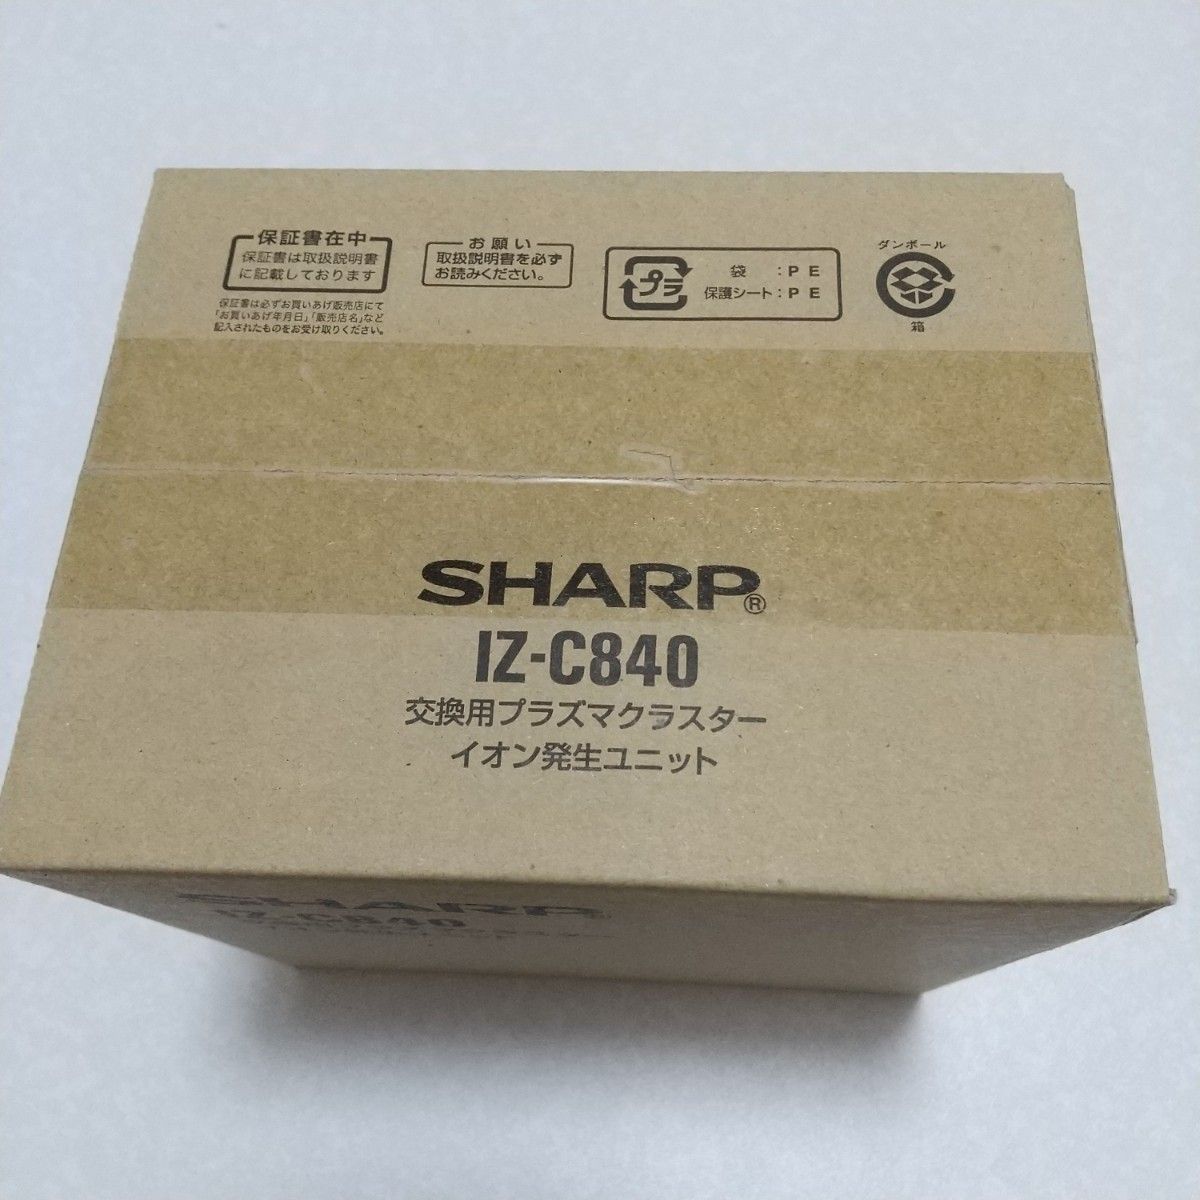 SHARP IZ-C840 シャープ 交換用プラズマクラスター イオン発生ユニット